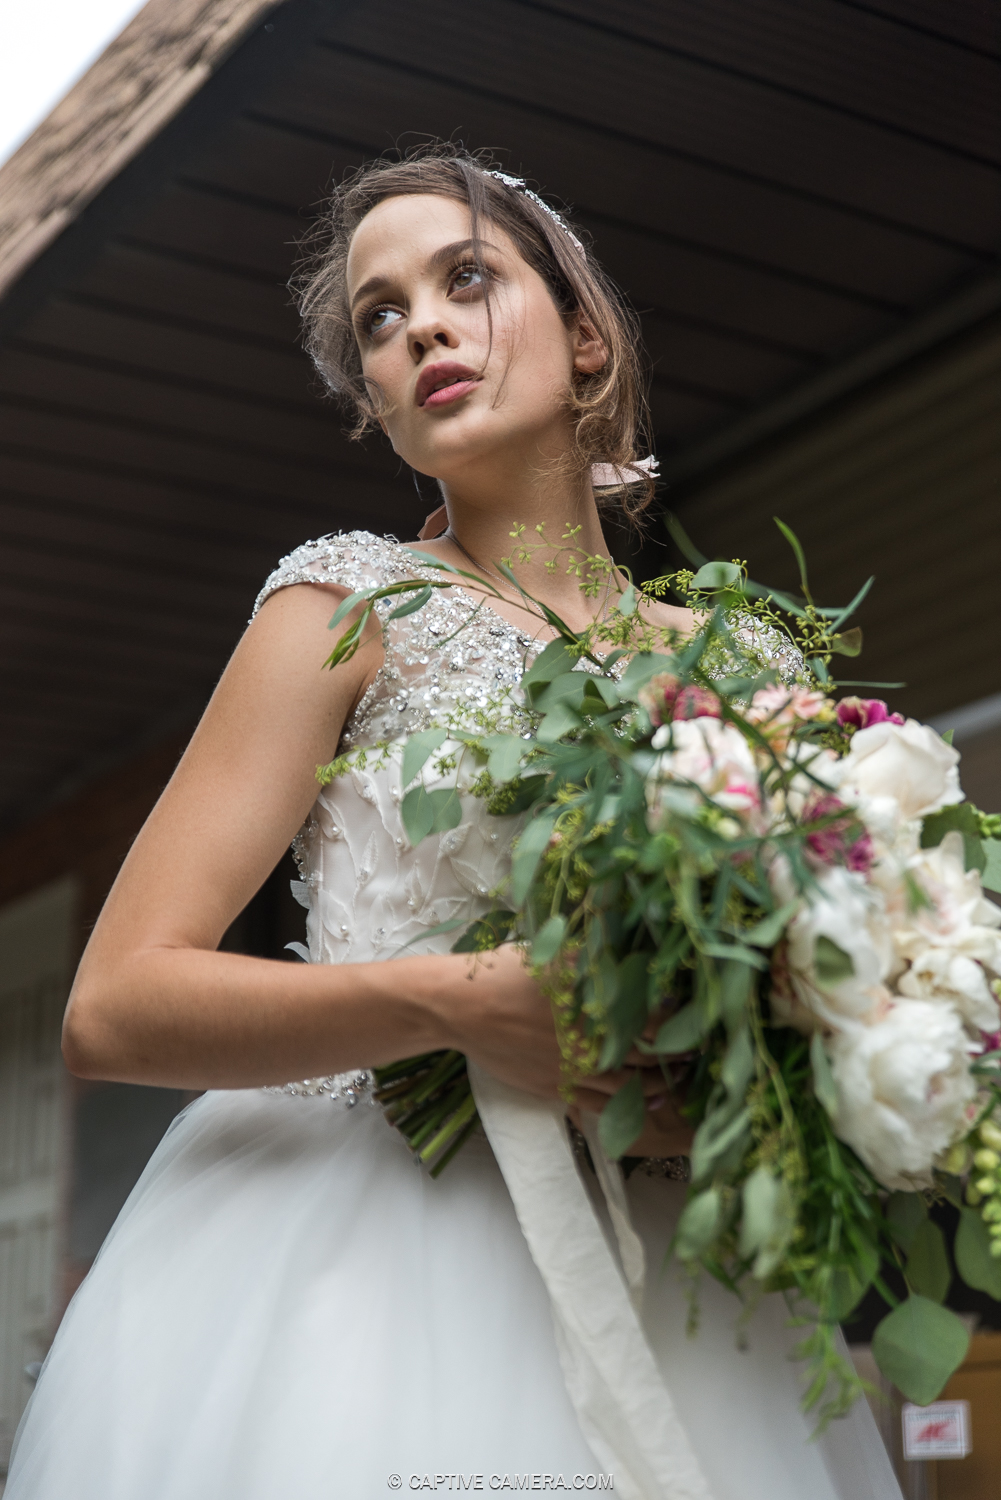 20190713 - Styled Wedding - Captive Camera-1408.jpg